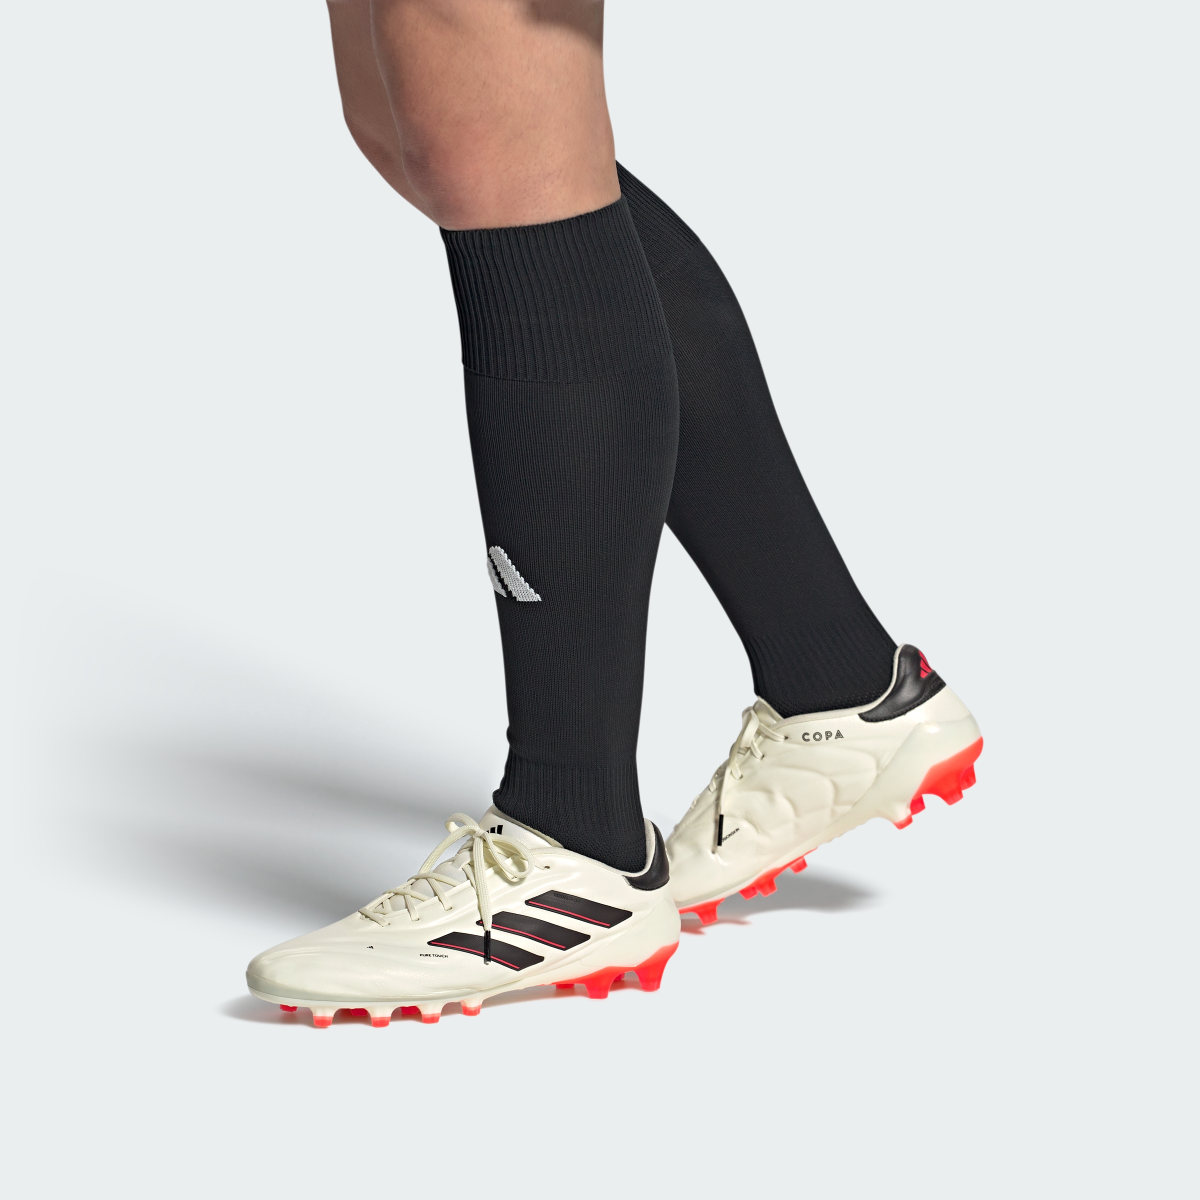 Adidas Copa Pure II Elite Artificial Grass Boots. 5